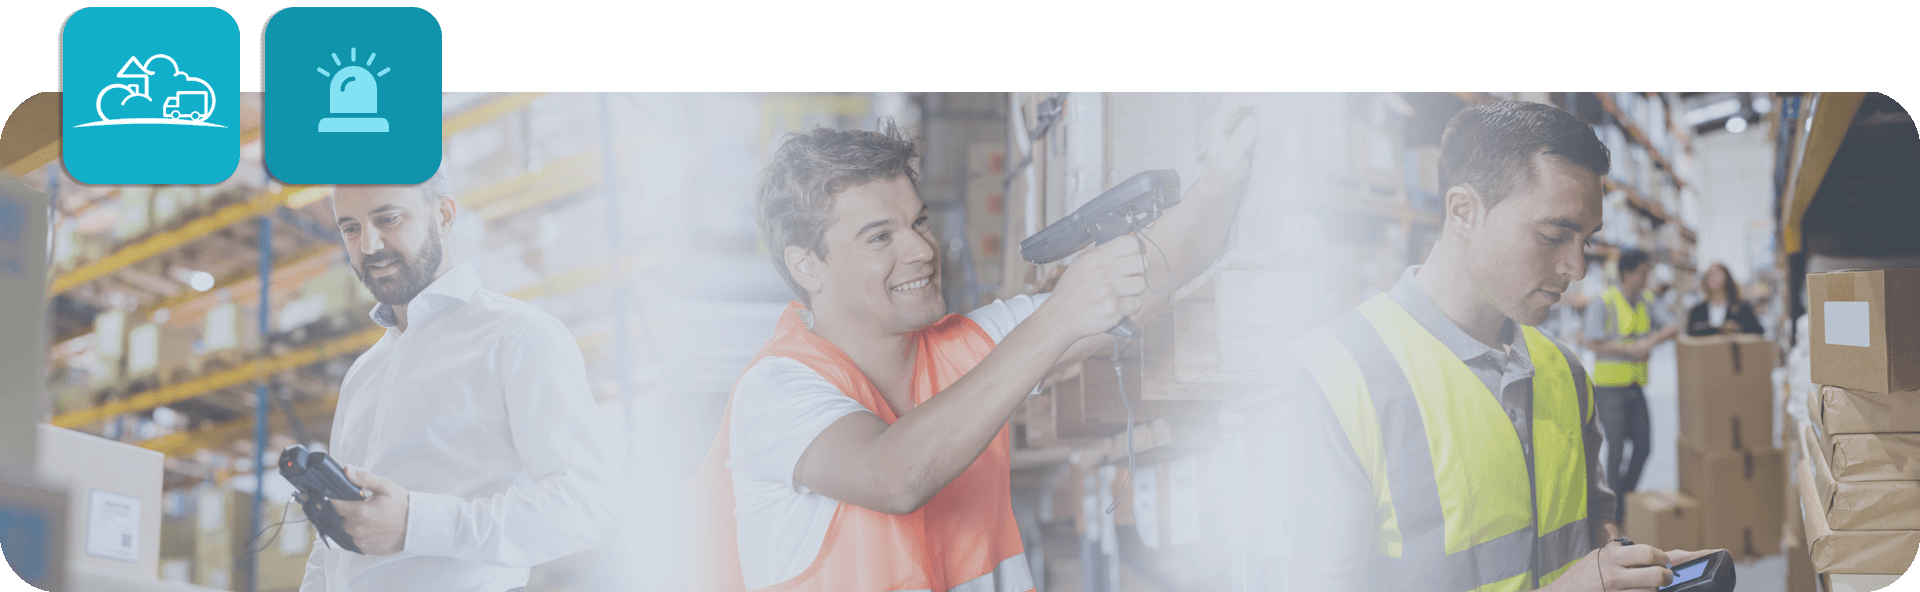 warehouse workers using handheld scanners